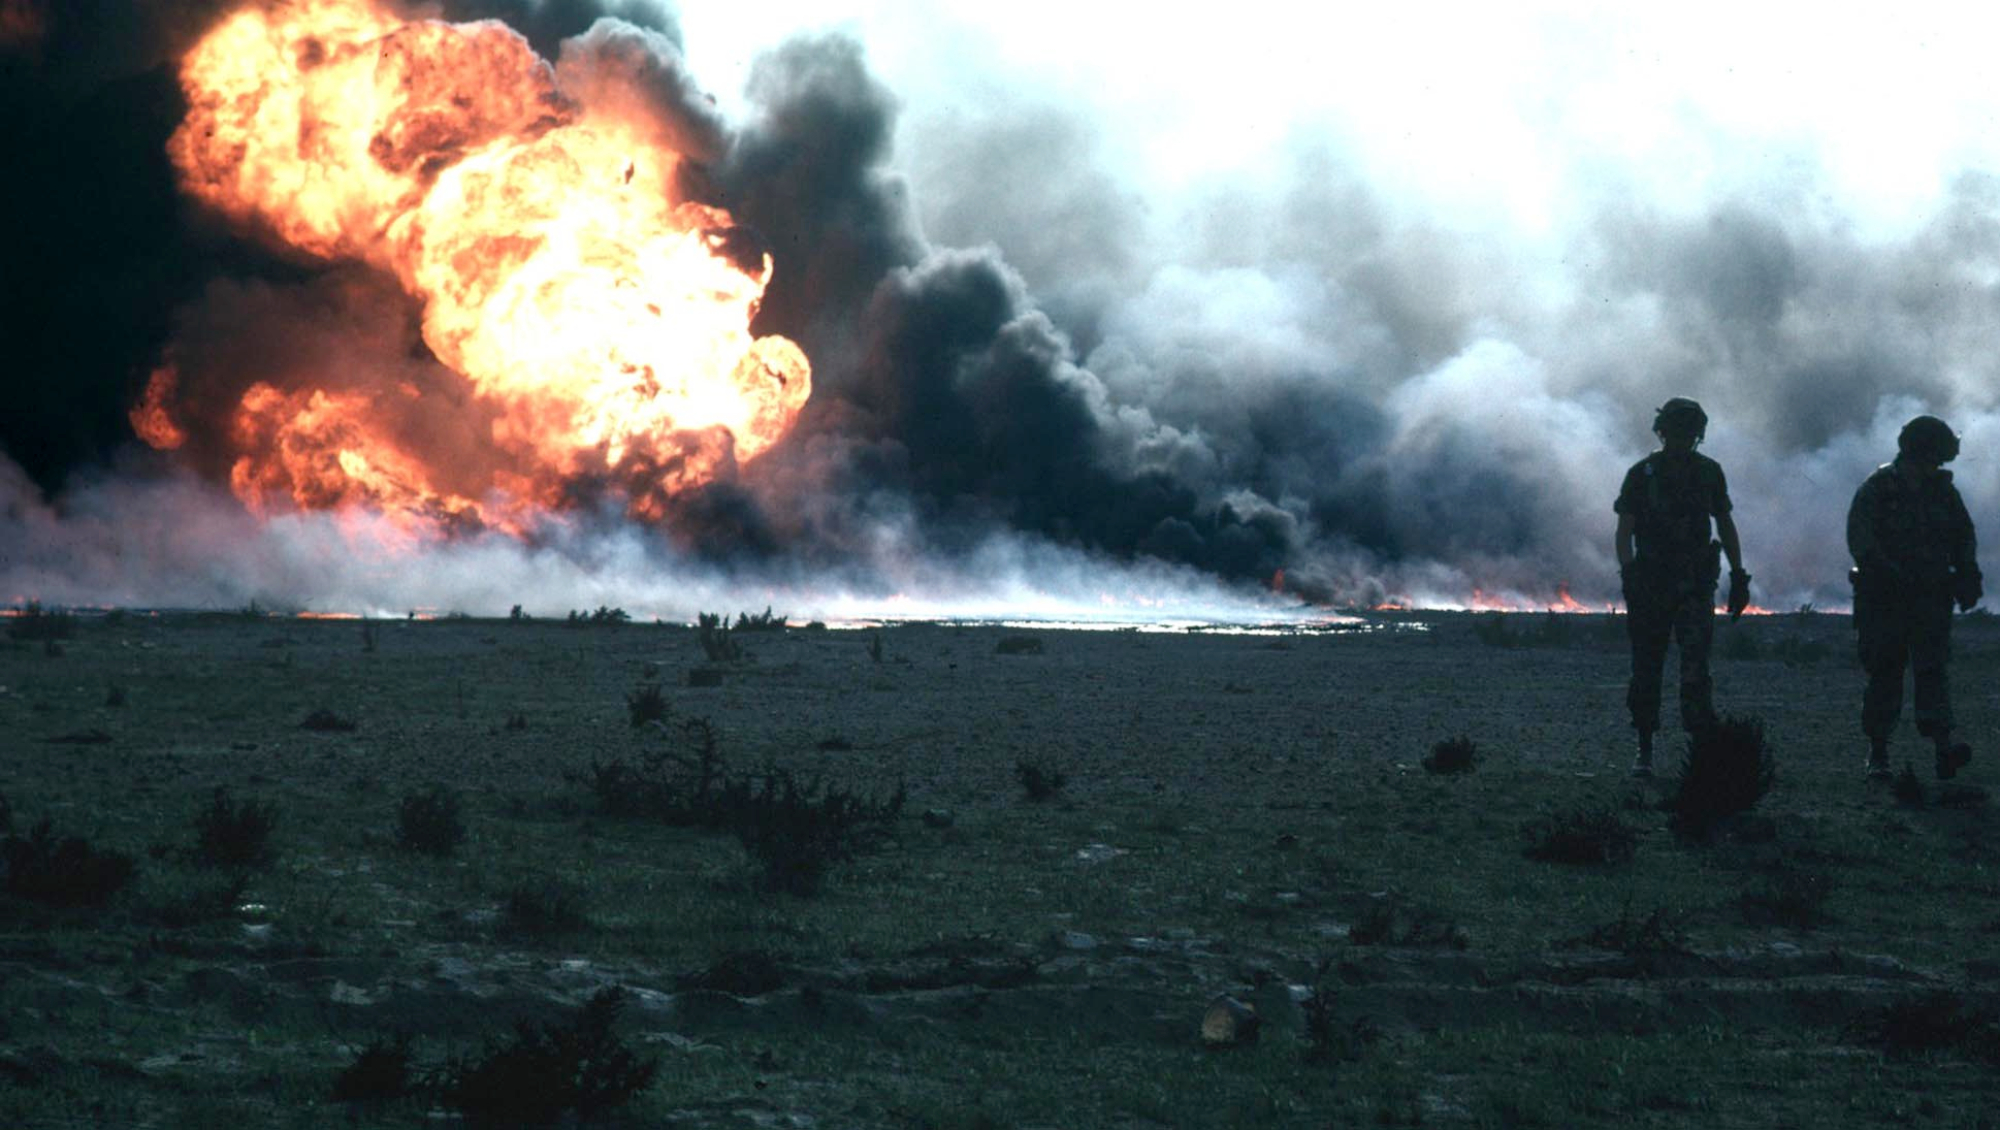 Burning oilfield during Operation Desert Storm, Kuwait, 1991. Source: wikimedia.com